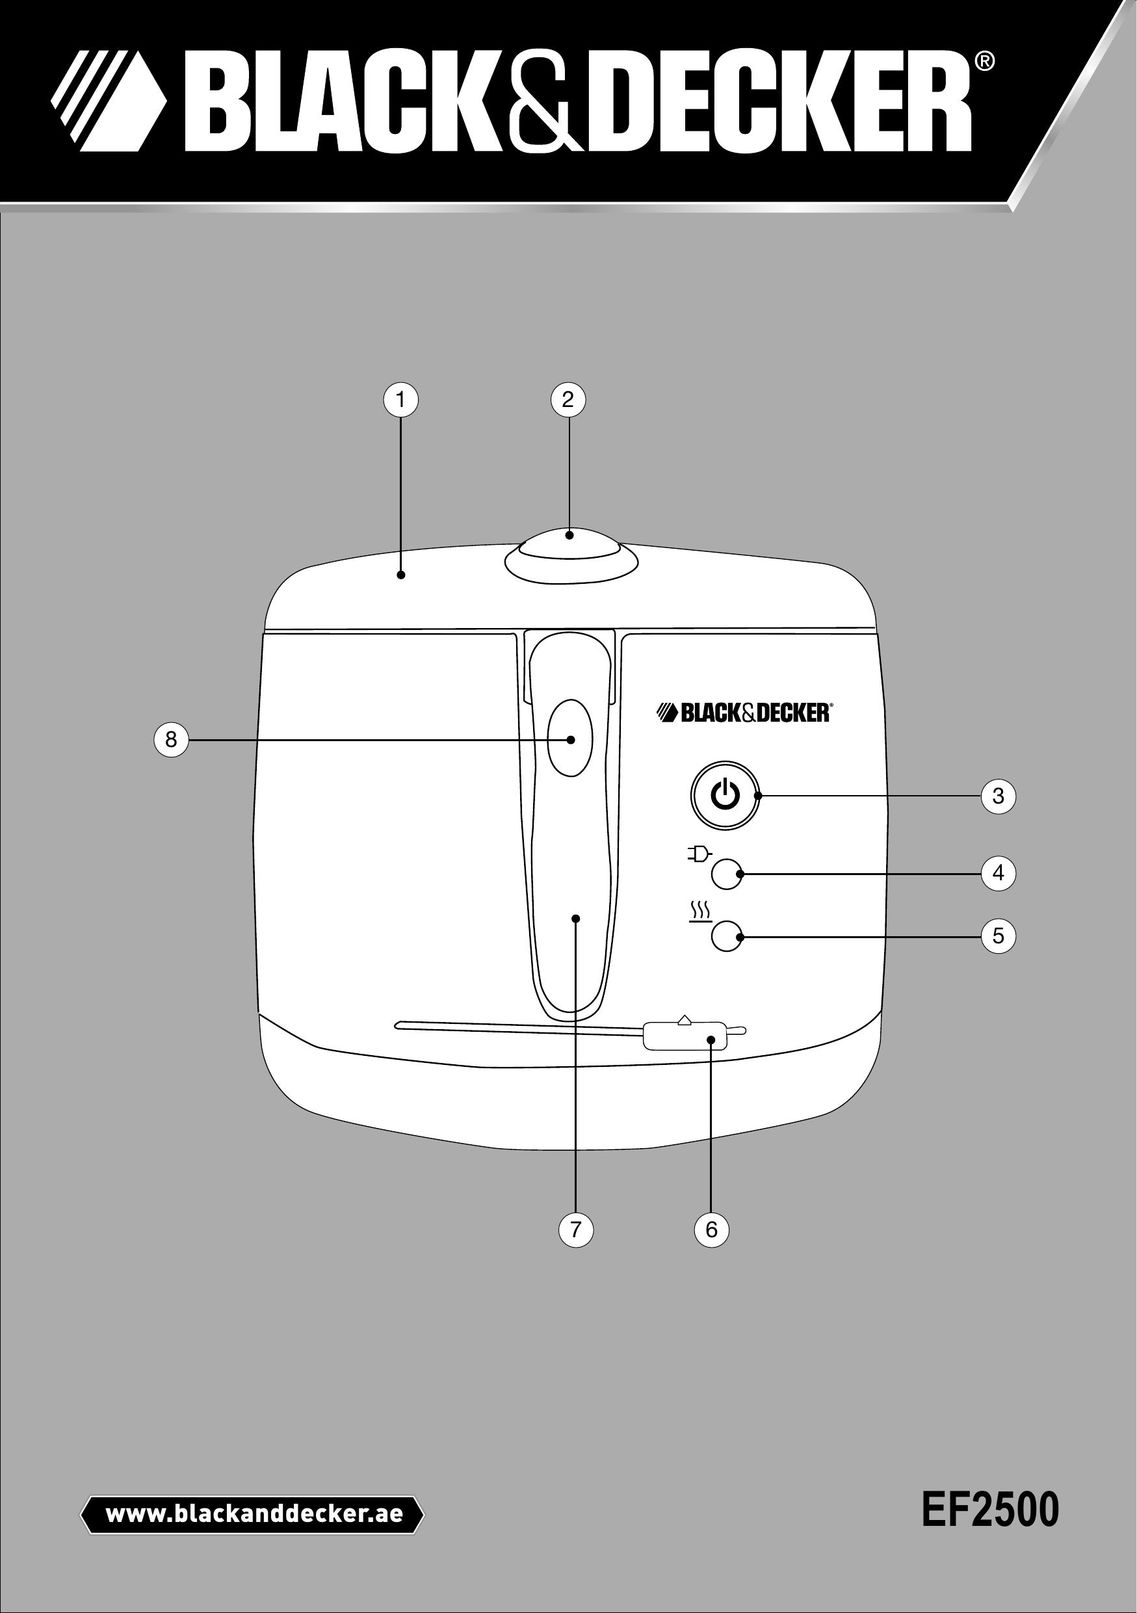 Black & Decker EF2500 Fryer User Manual